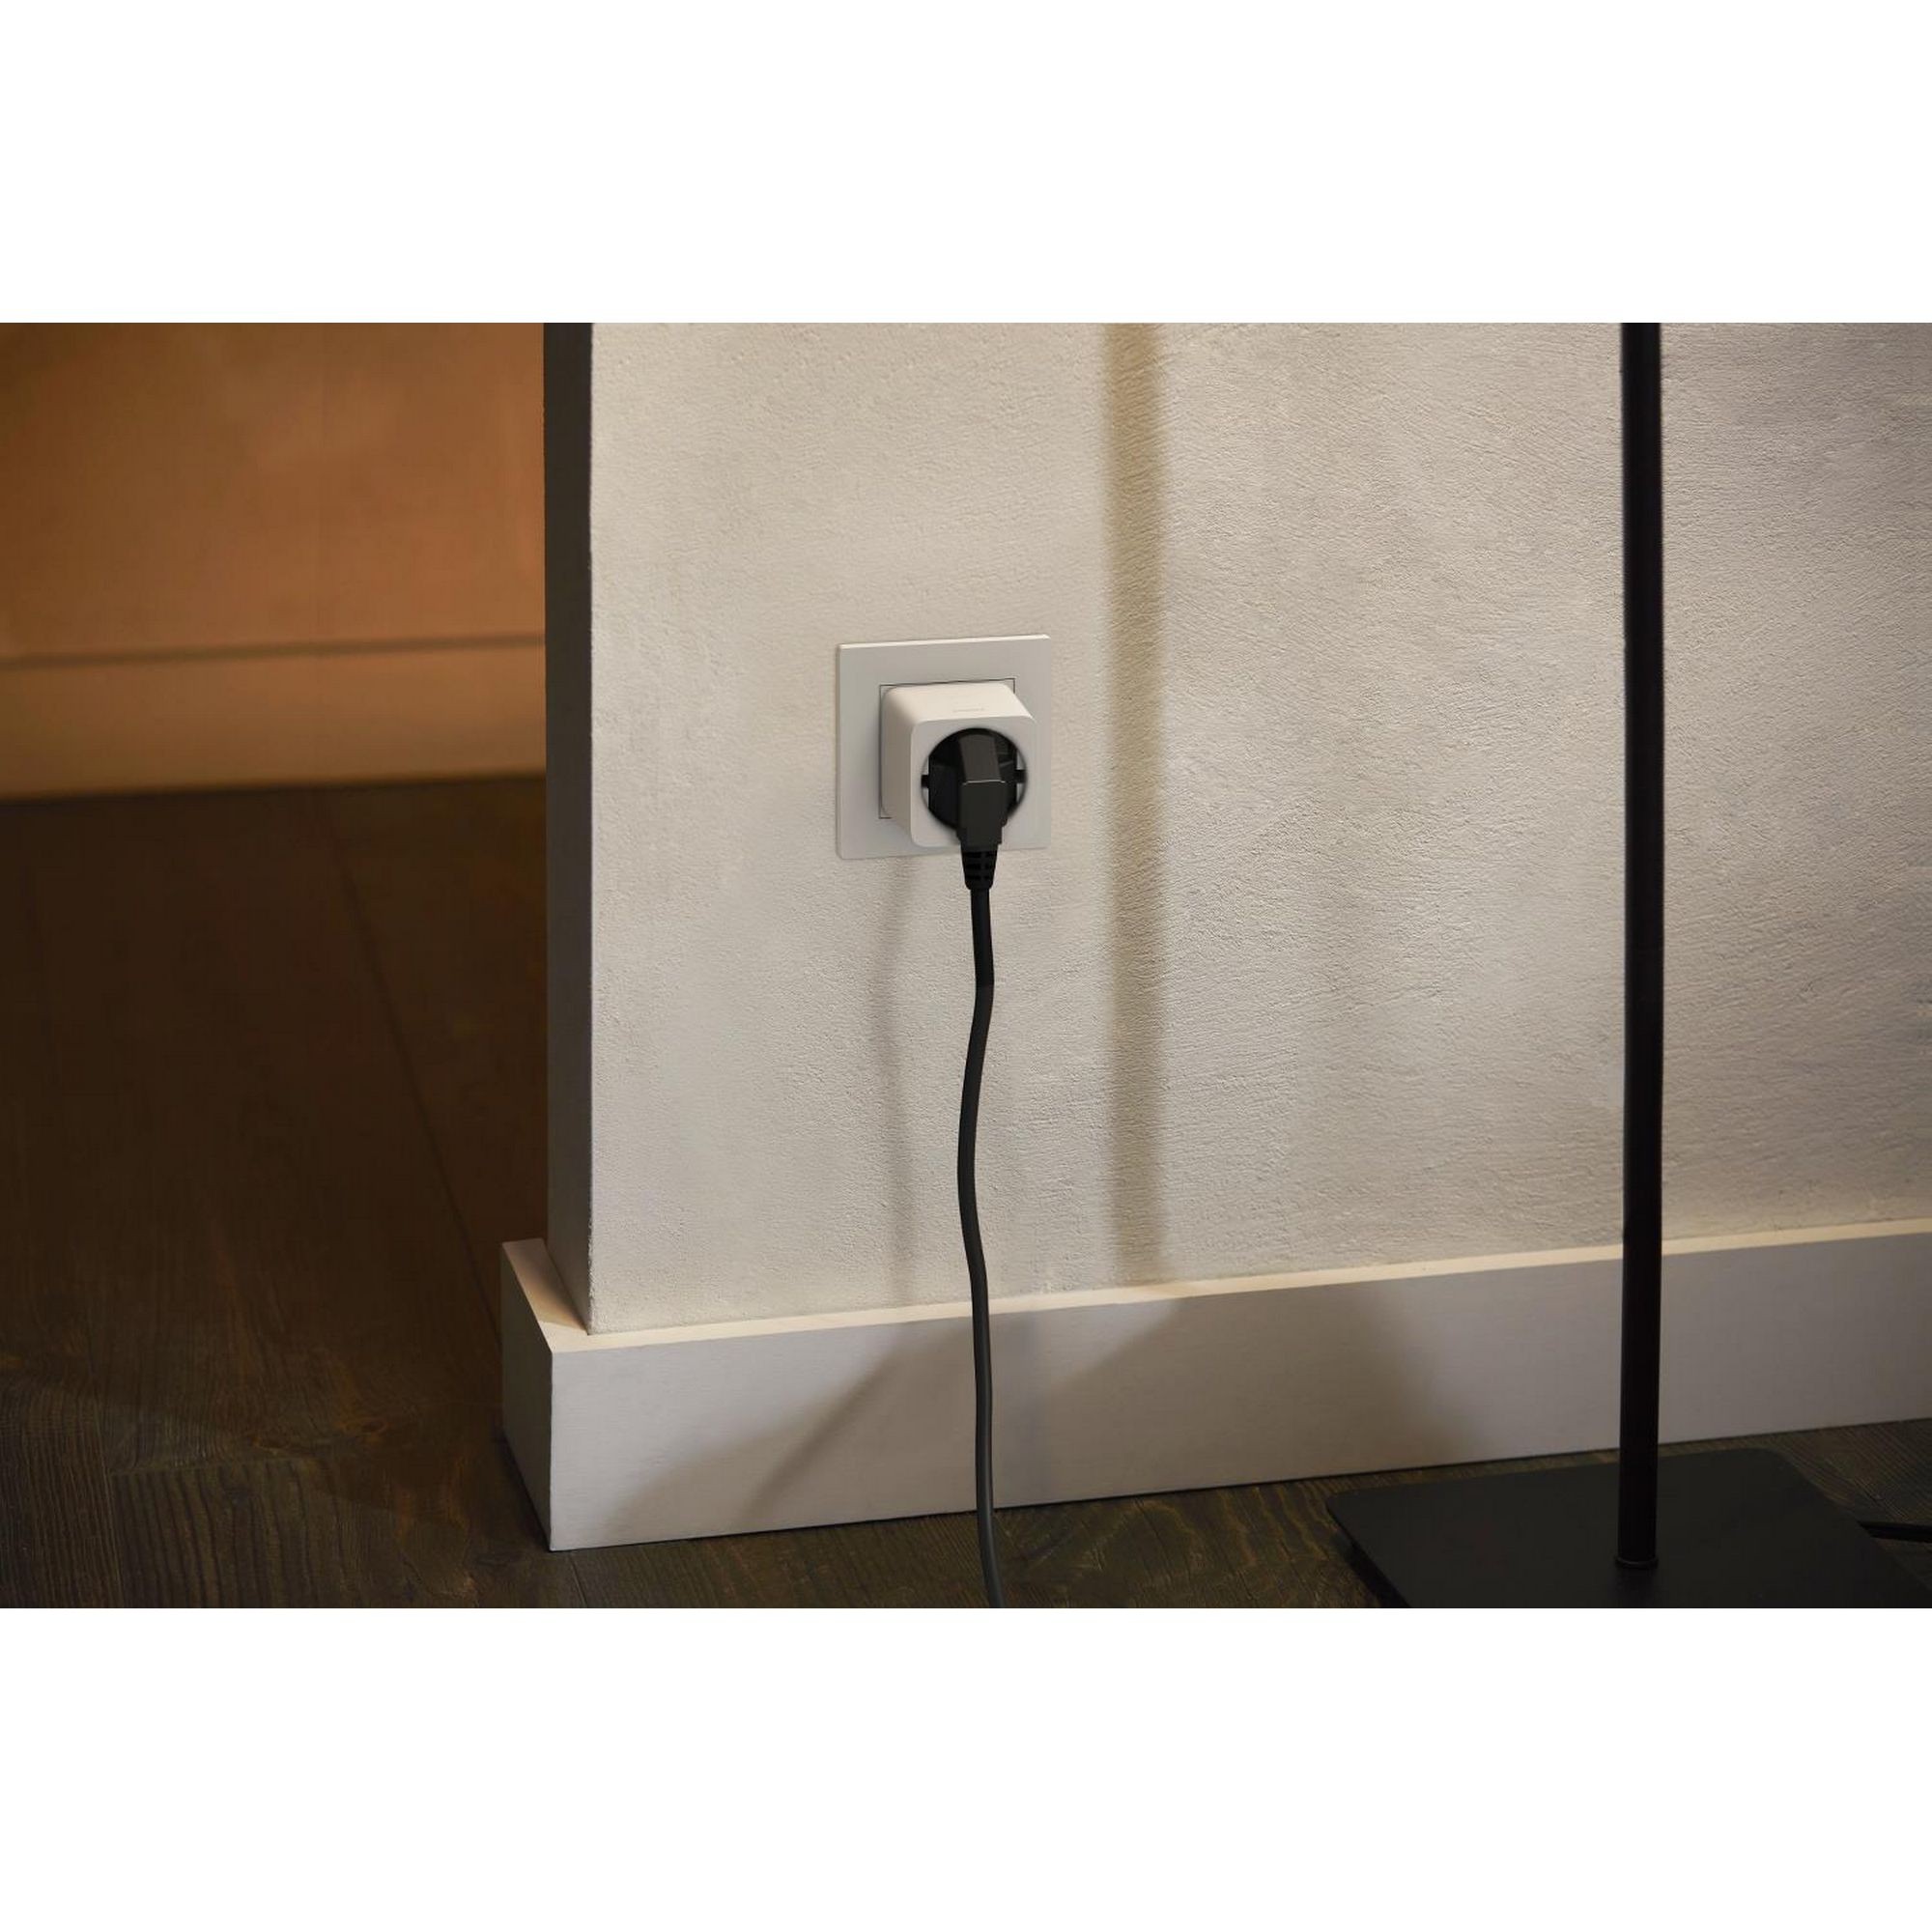 Steckdose 'Hue' Smart Plug DE/AT + product picture